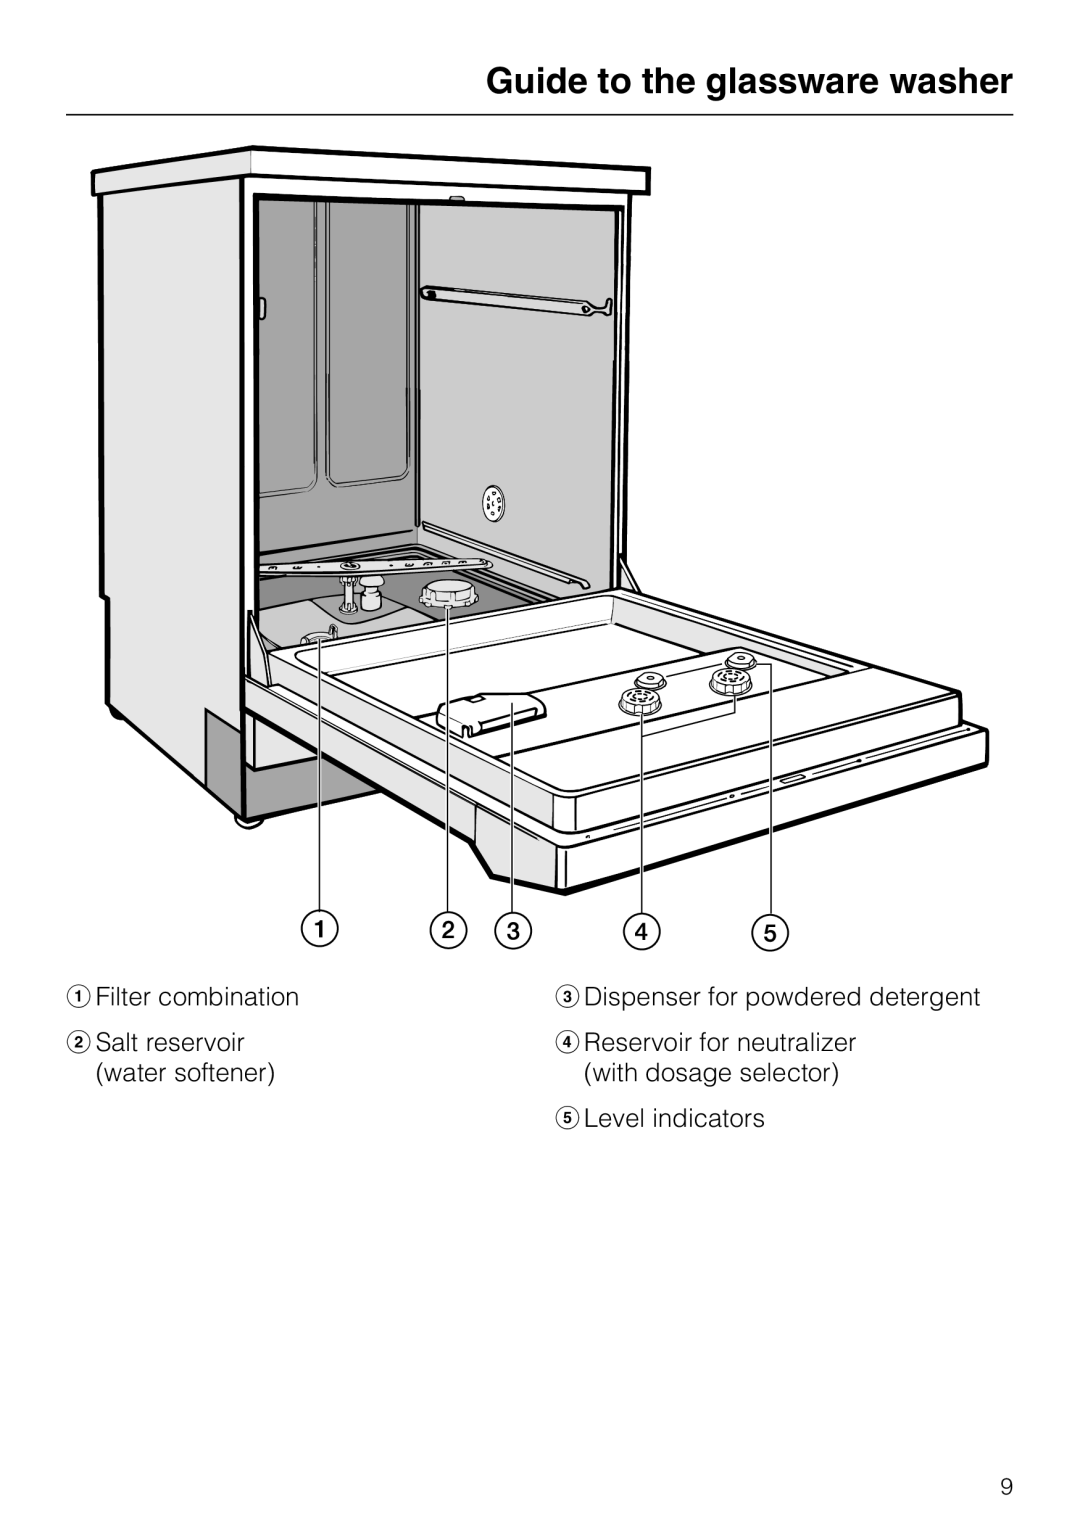 Miele G 7804 manual Guide to the glassware washer, aFilter combination, cDispenser for powdered detergent, bSalt reservoir 